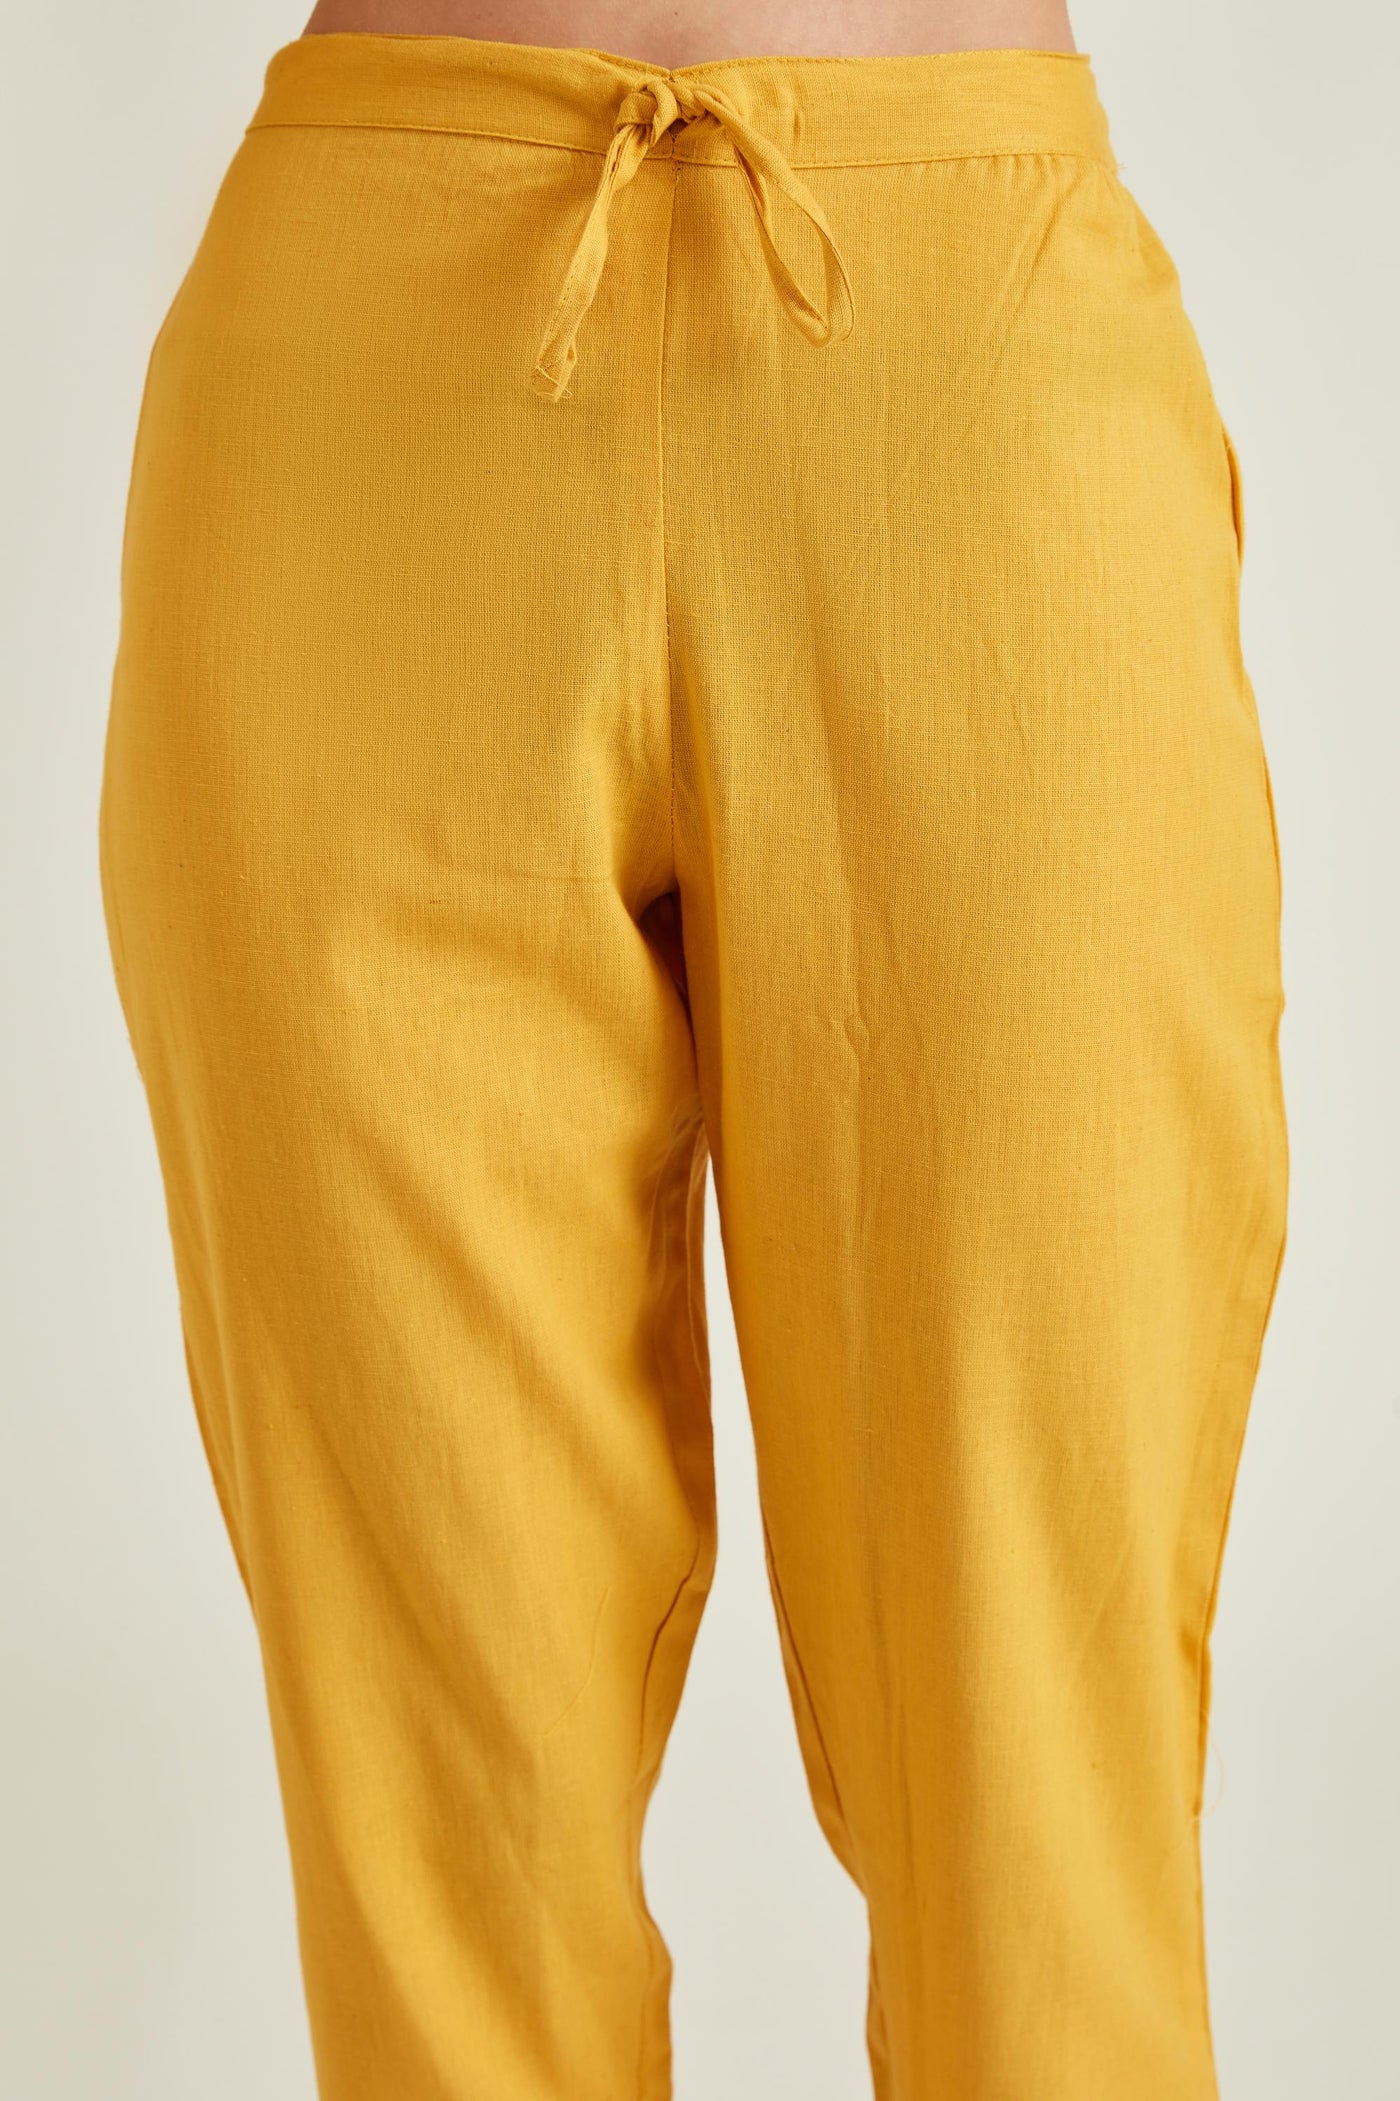 Neeru's Yellow Colour Muslin Fabric Suit